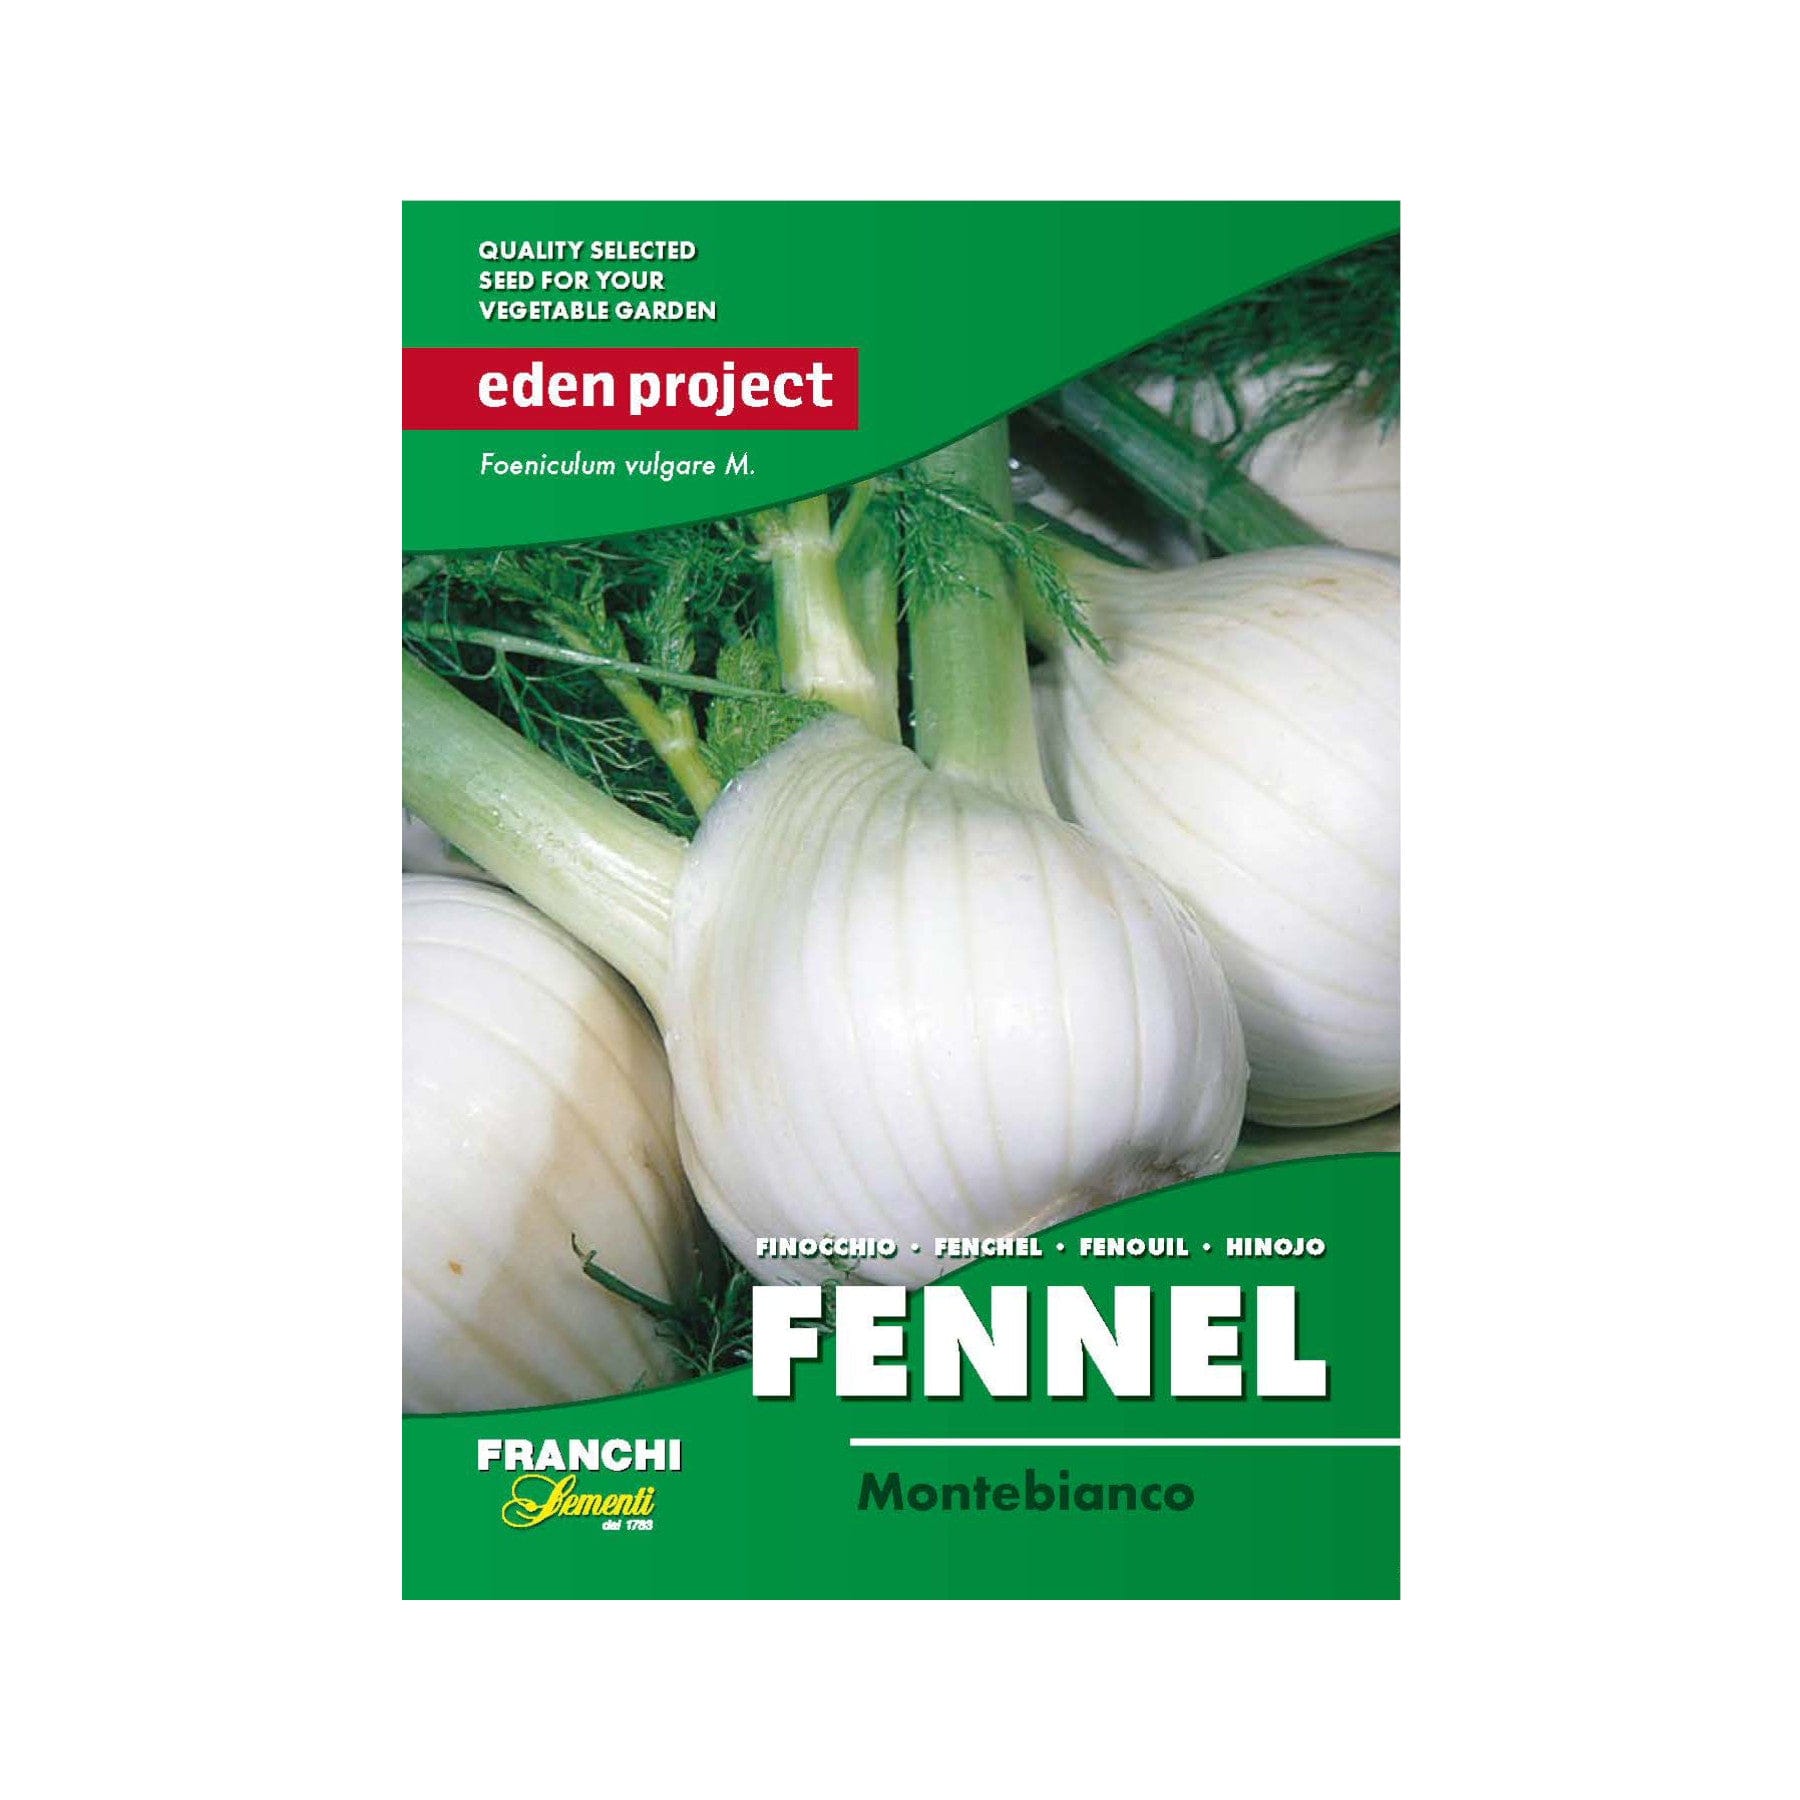 Fennel montebianco seeds